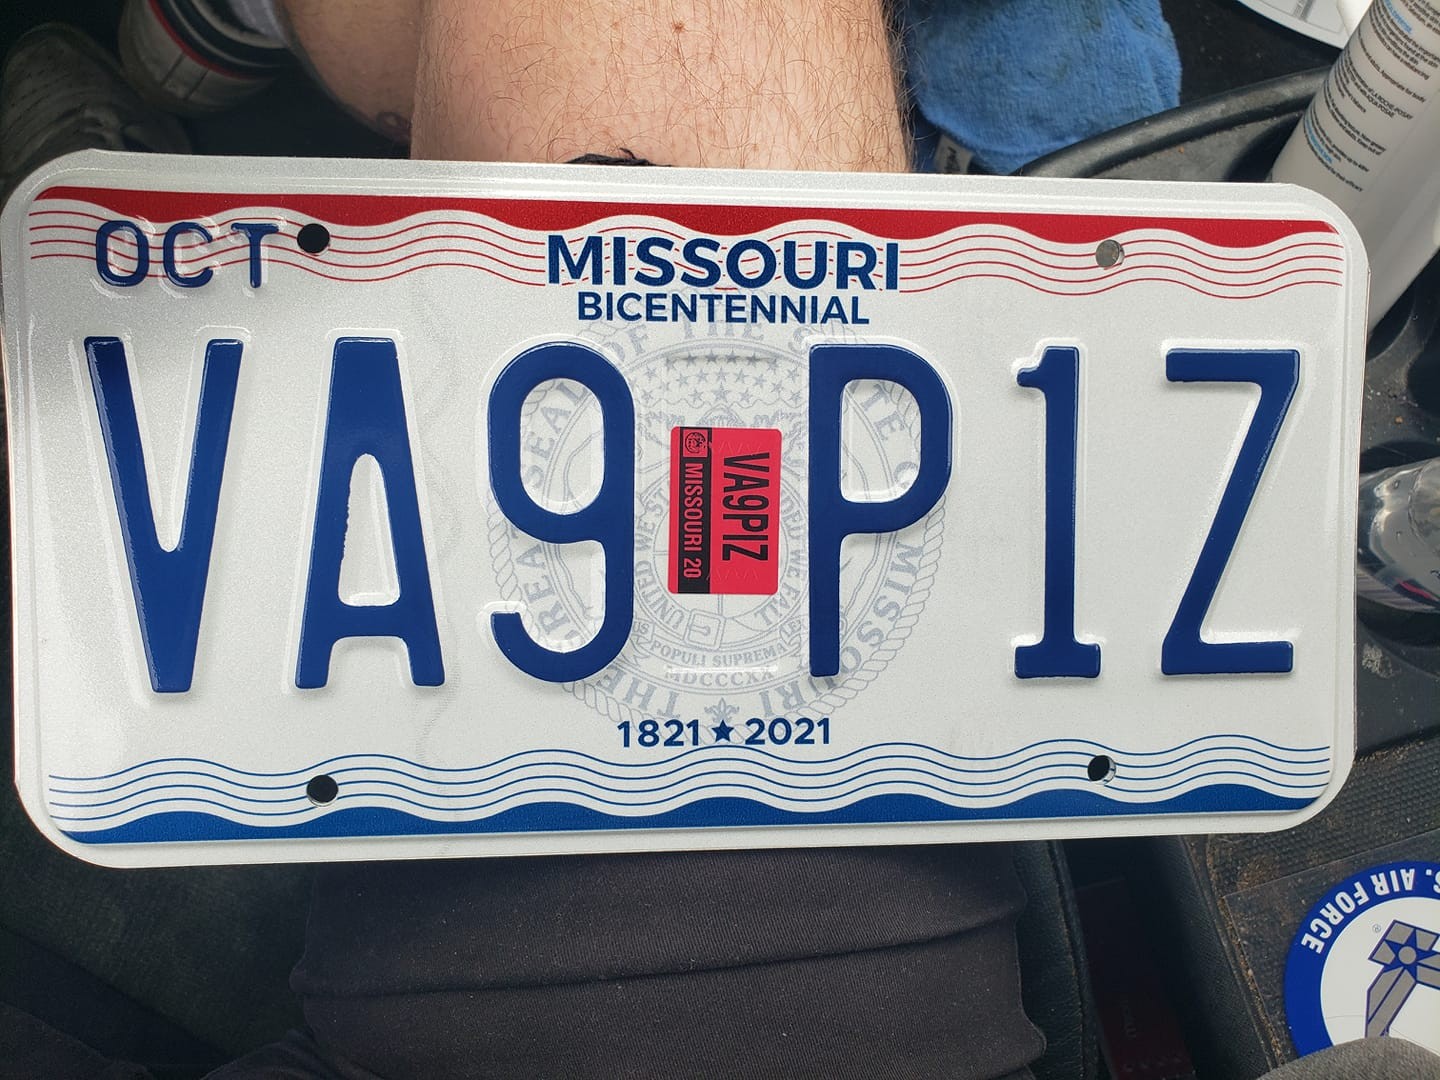 Vag Plz Is Now A Missouri License Plate Thank You Dmv Arts Blog